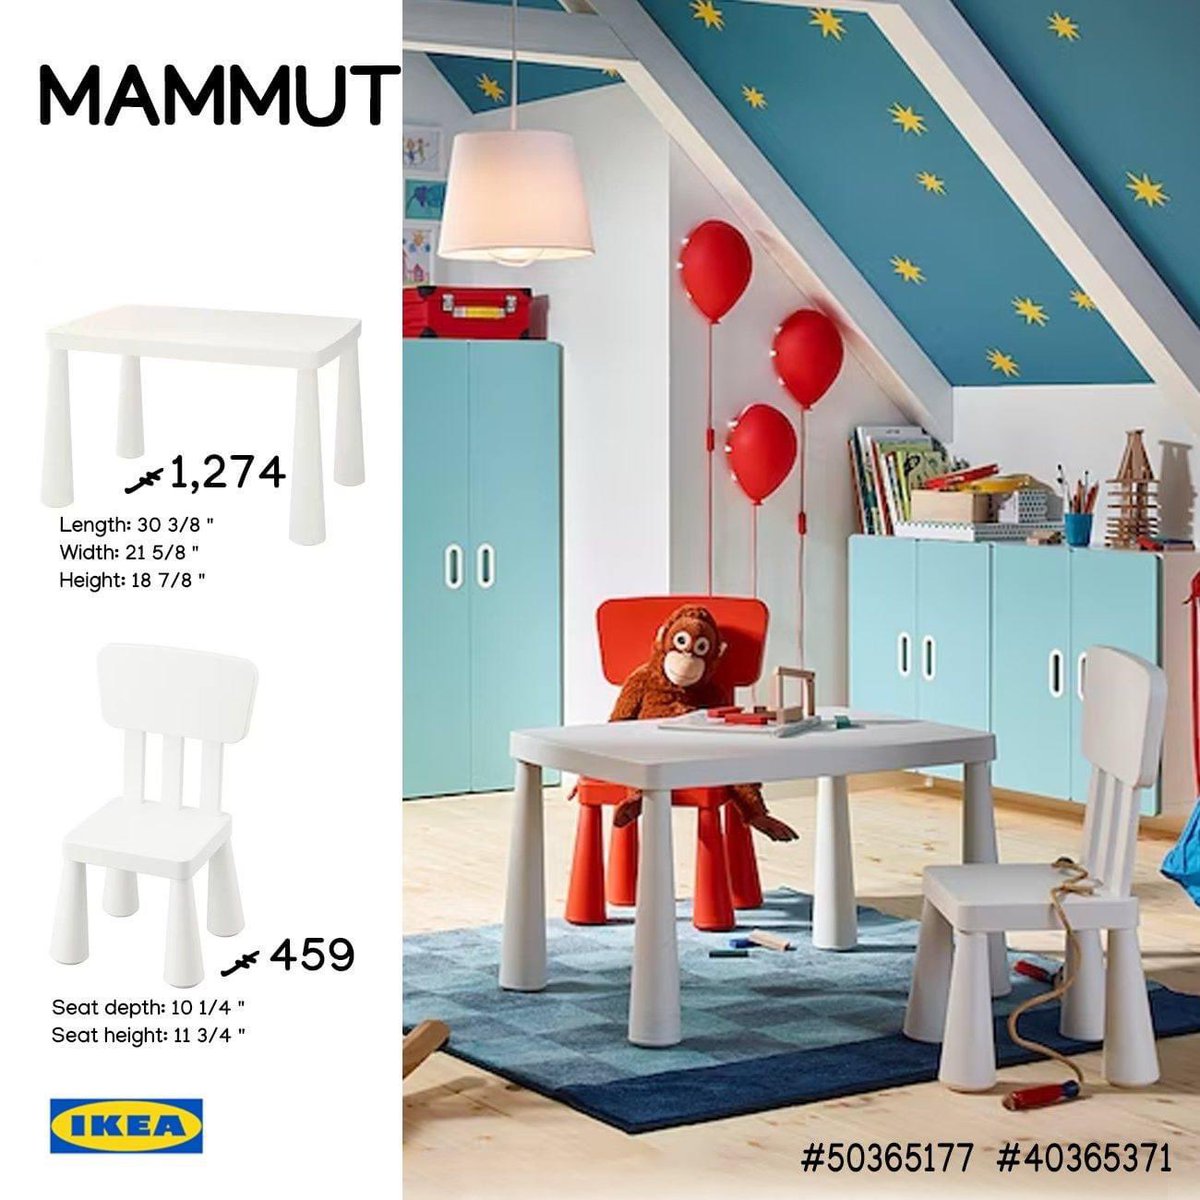 IKEA MAMMUT children's Table 
IKEA MAMMUT children's Chair
Now available @HomelandMv 
#kidsfurniture #ikea #homelandmv